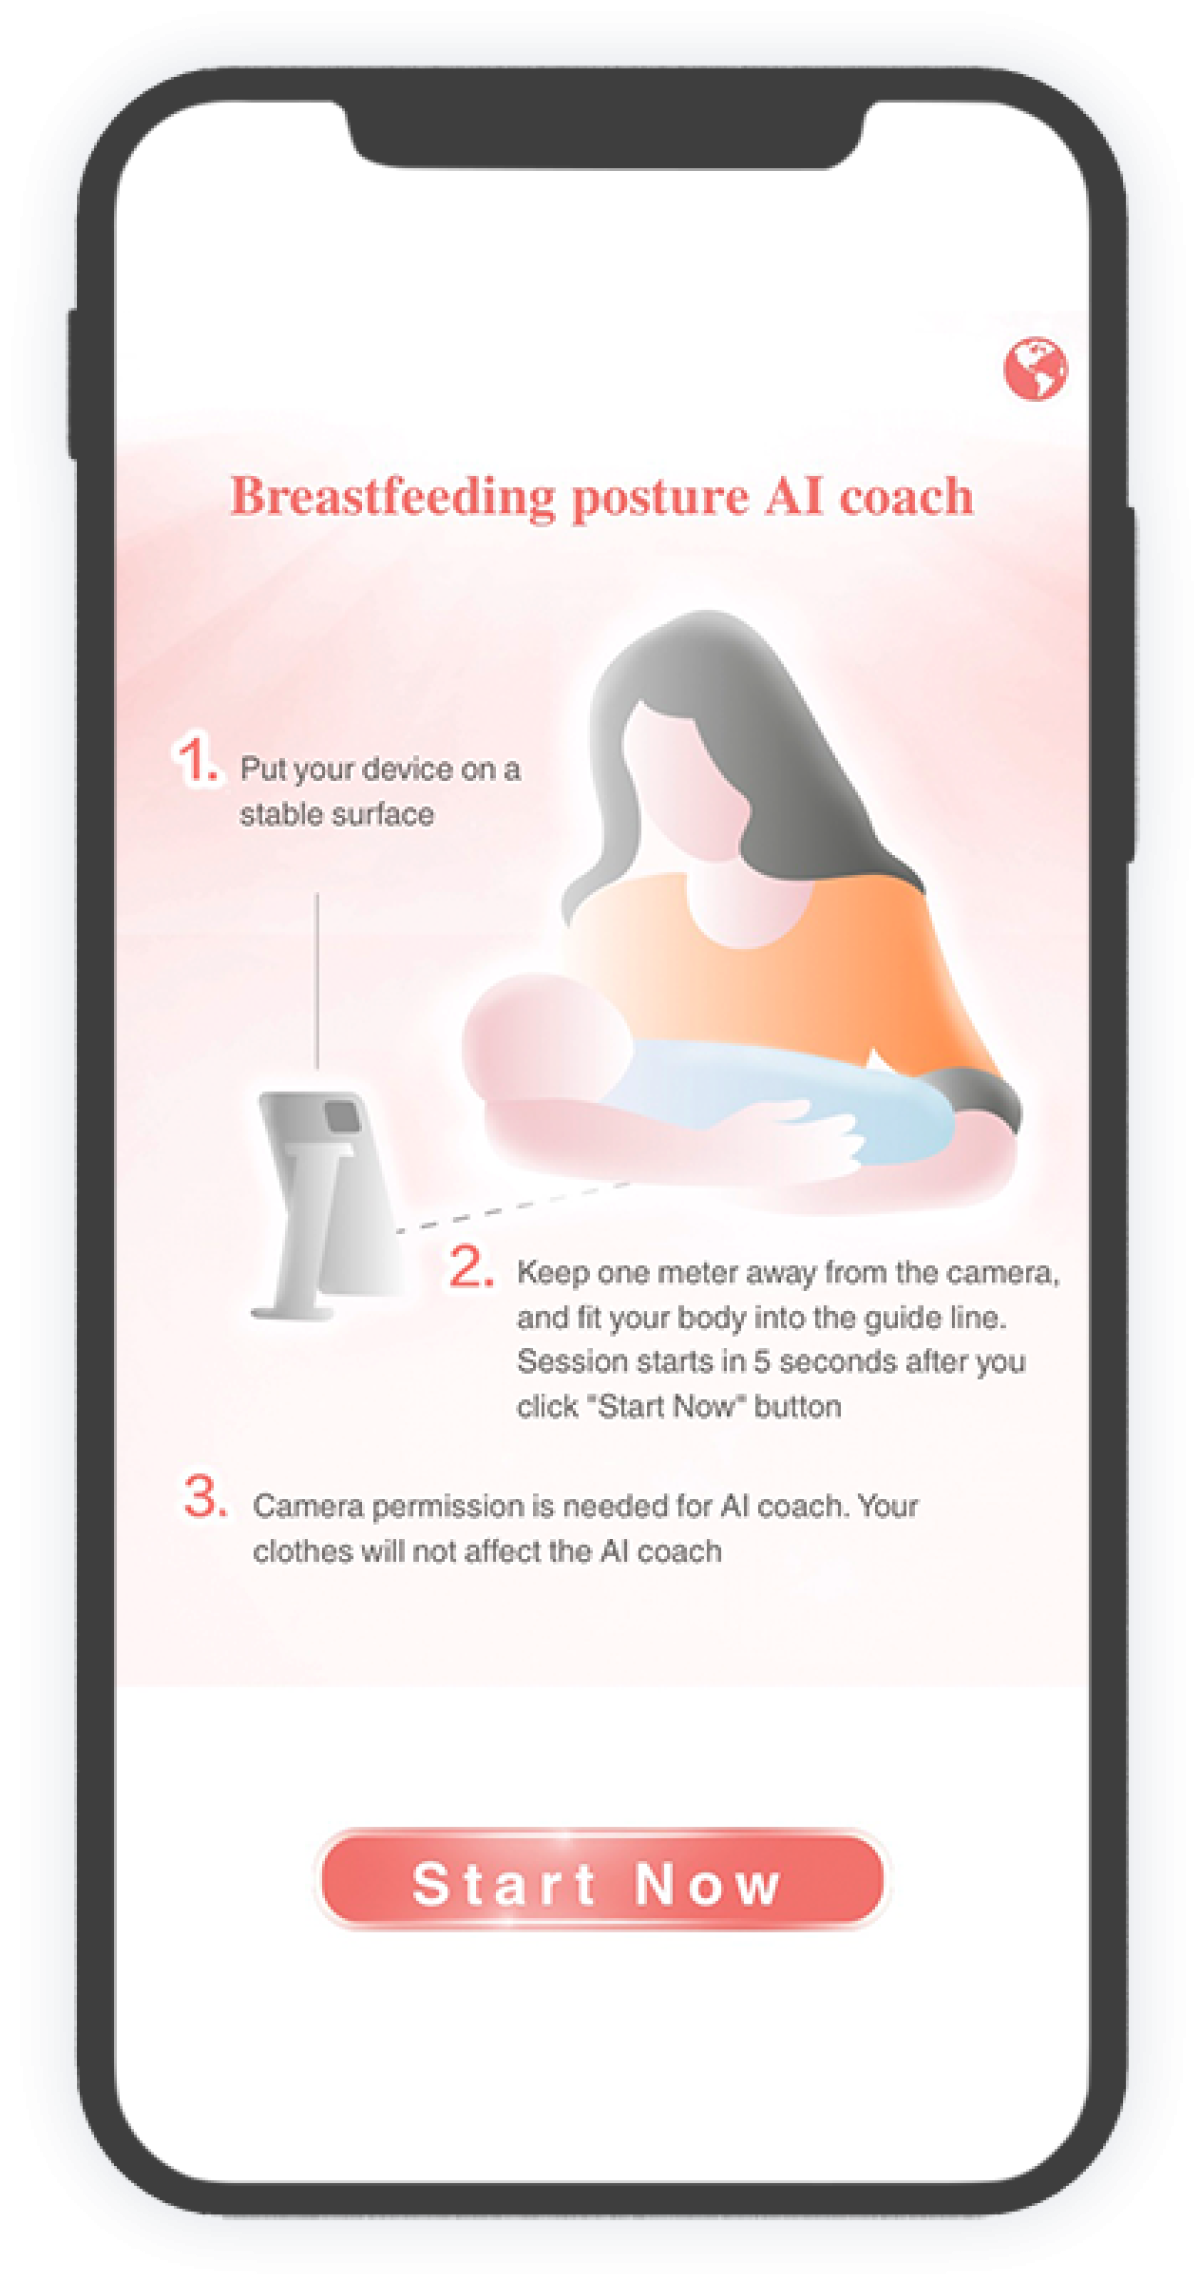 Breastfeeding posture AI coach